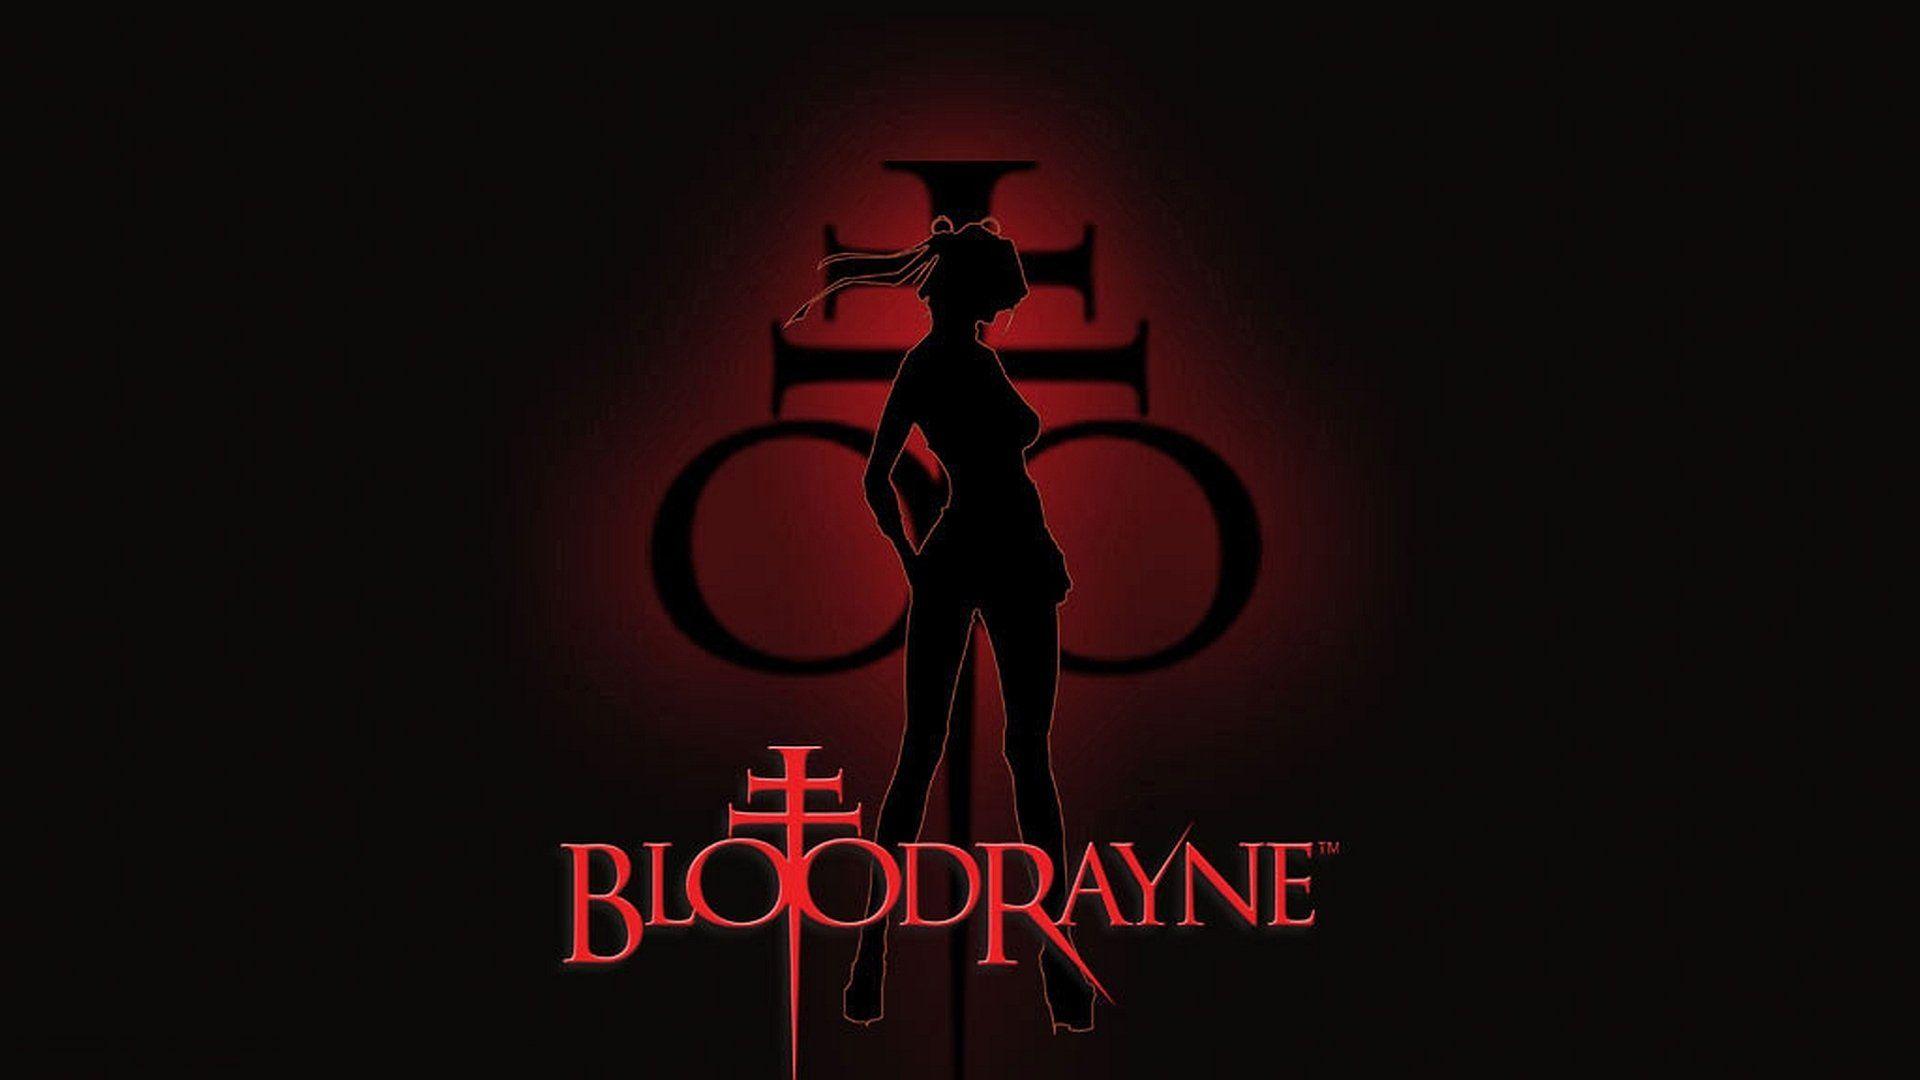 BloodRayne: Betrayal HD Wallpaper and Background Image